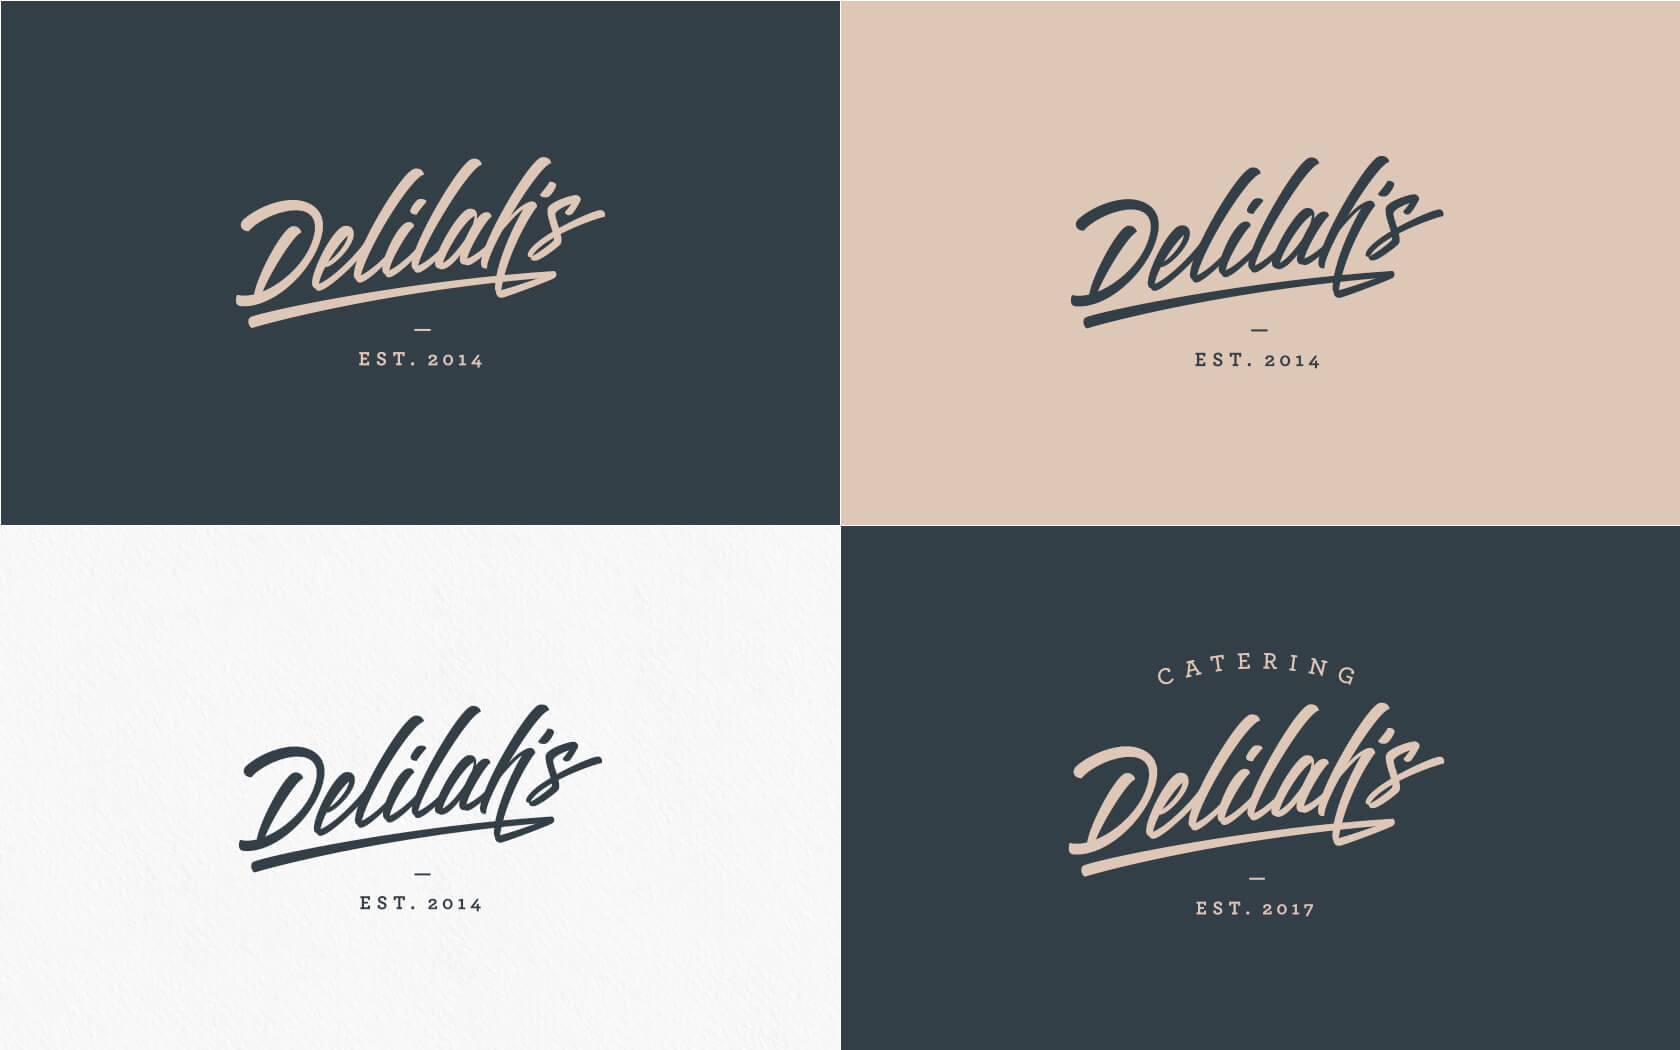 Delilah’s. Brand logo variation